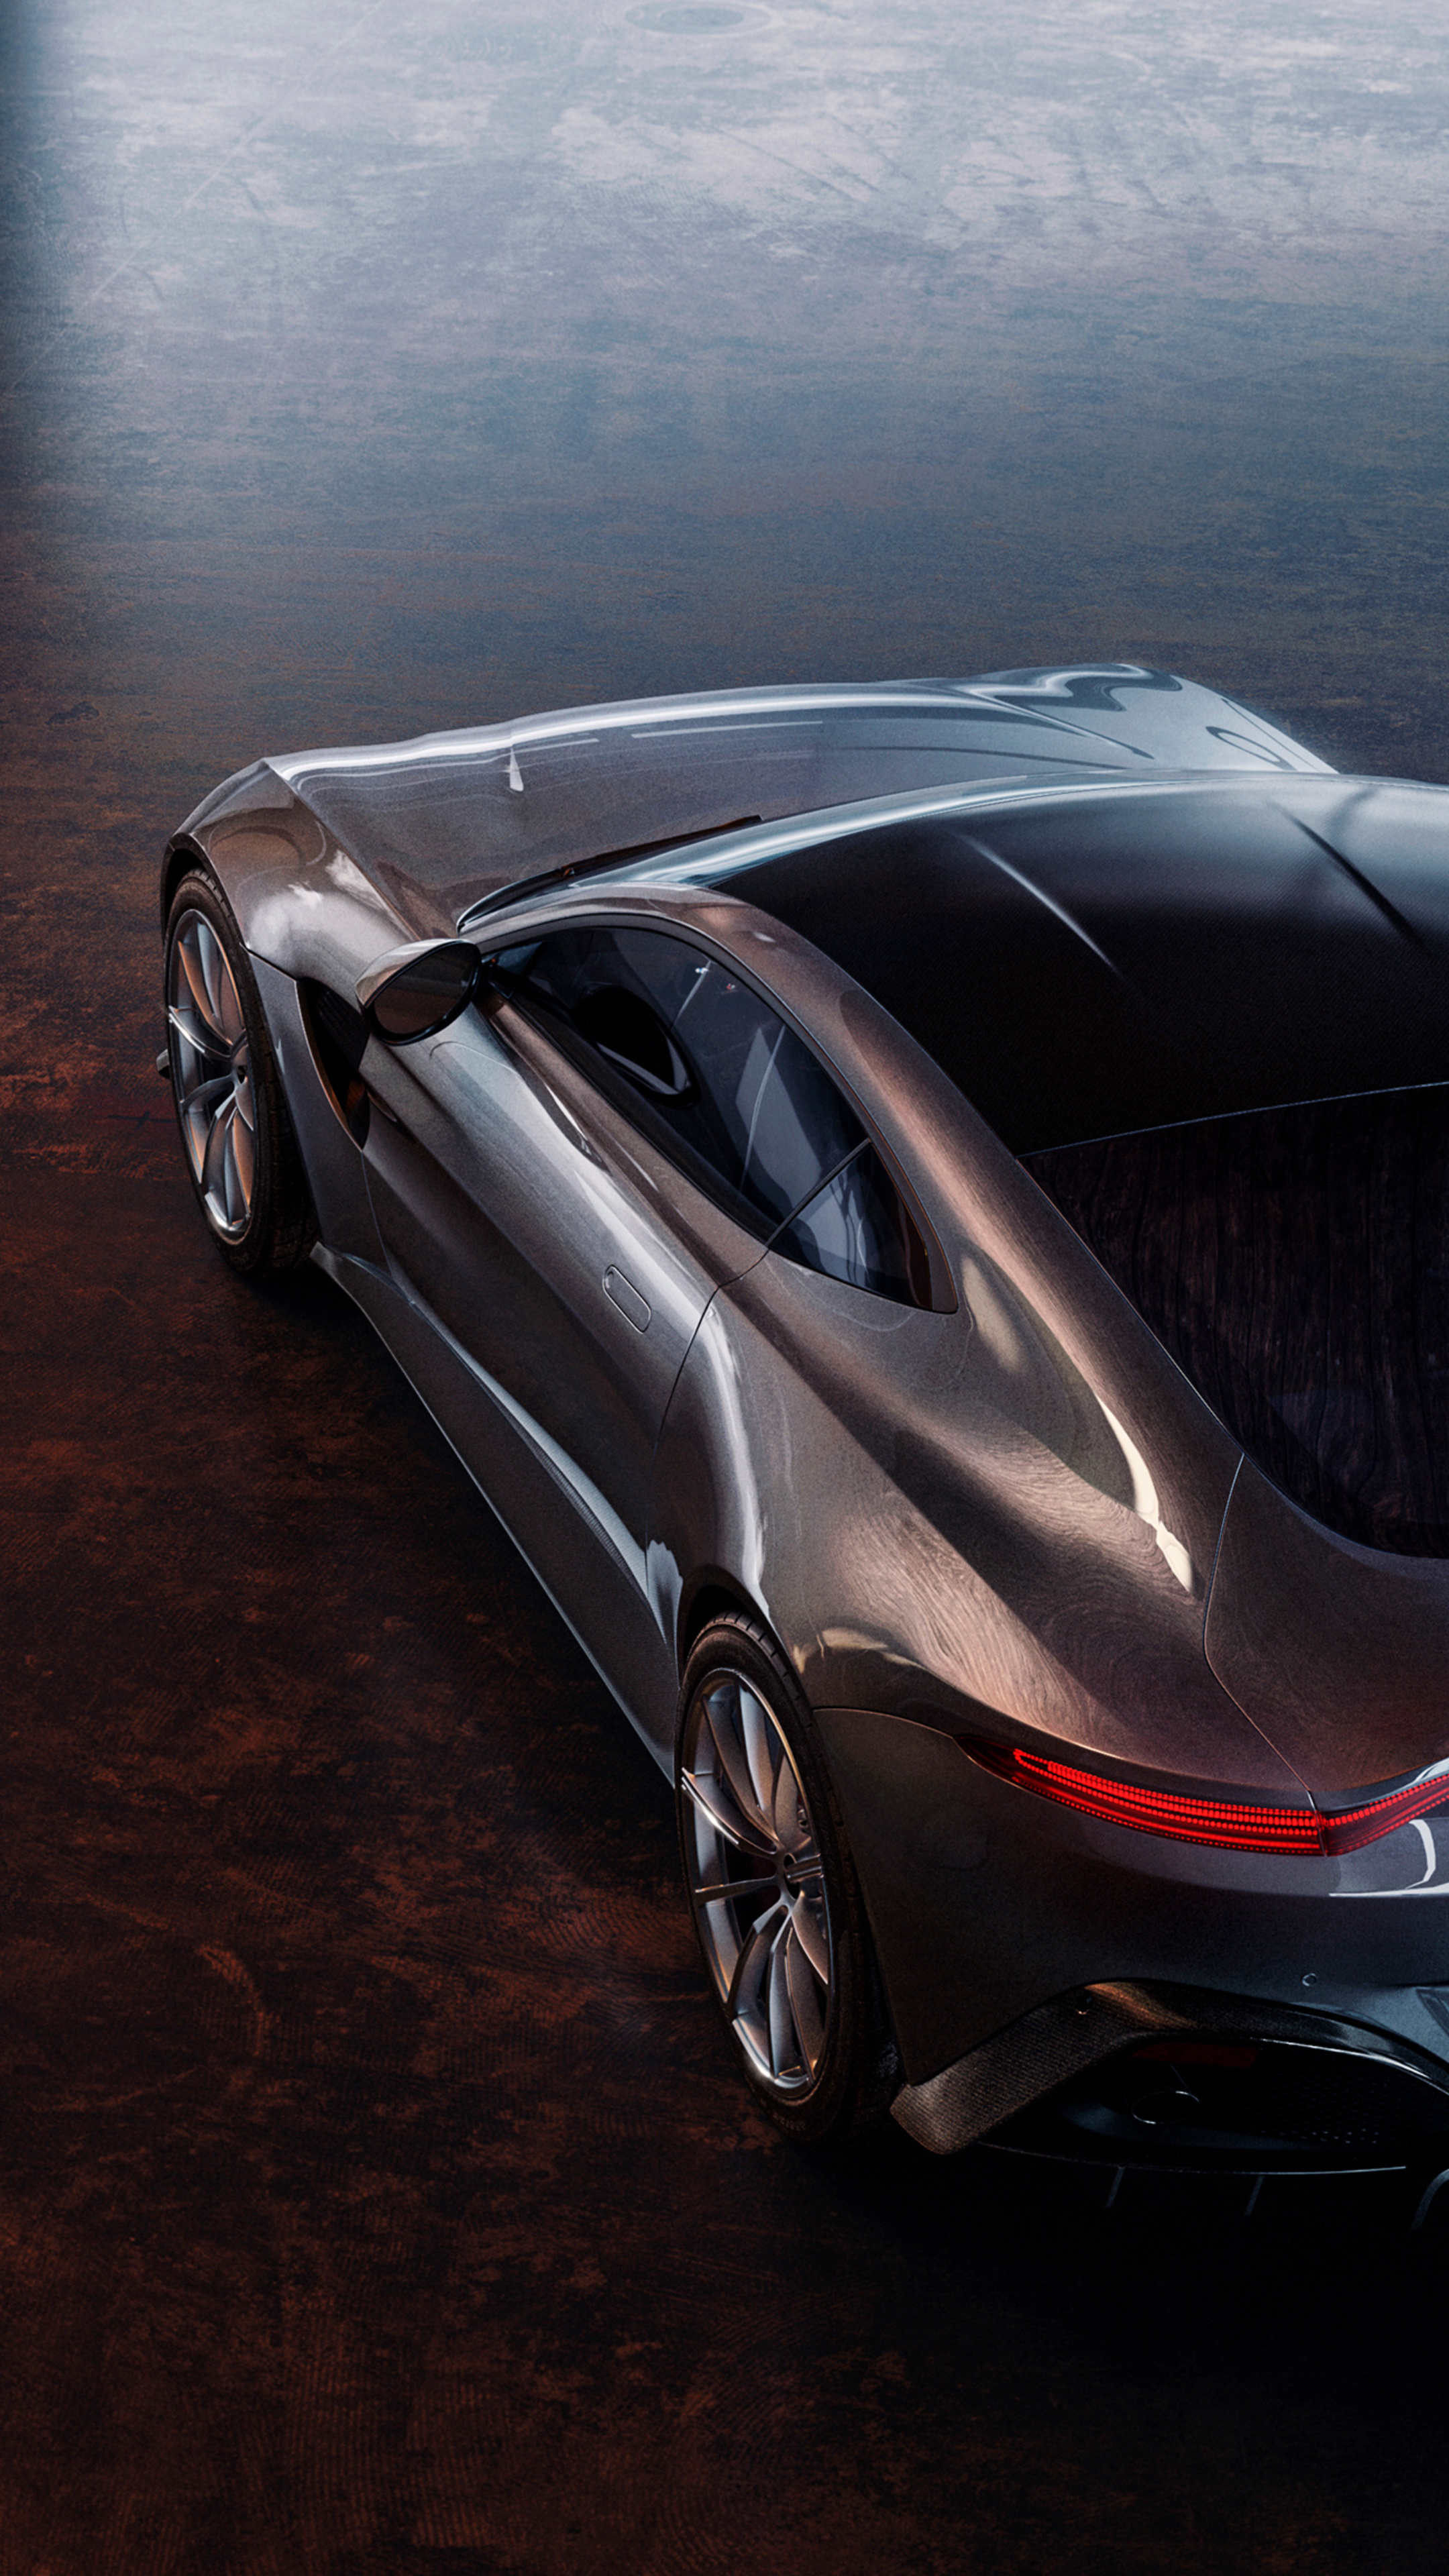 Aston Martin Vantage, Upper view magnificence, Xperia XZ wallpapers, Premium 4K images, 2160x3840 4K Phone